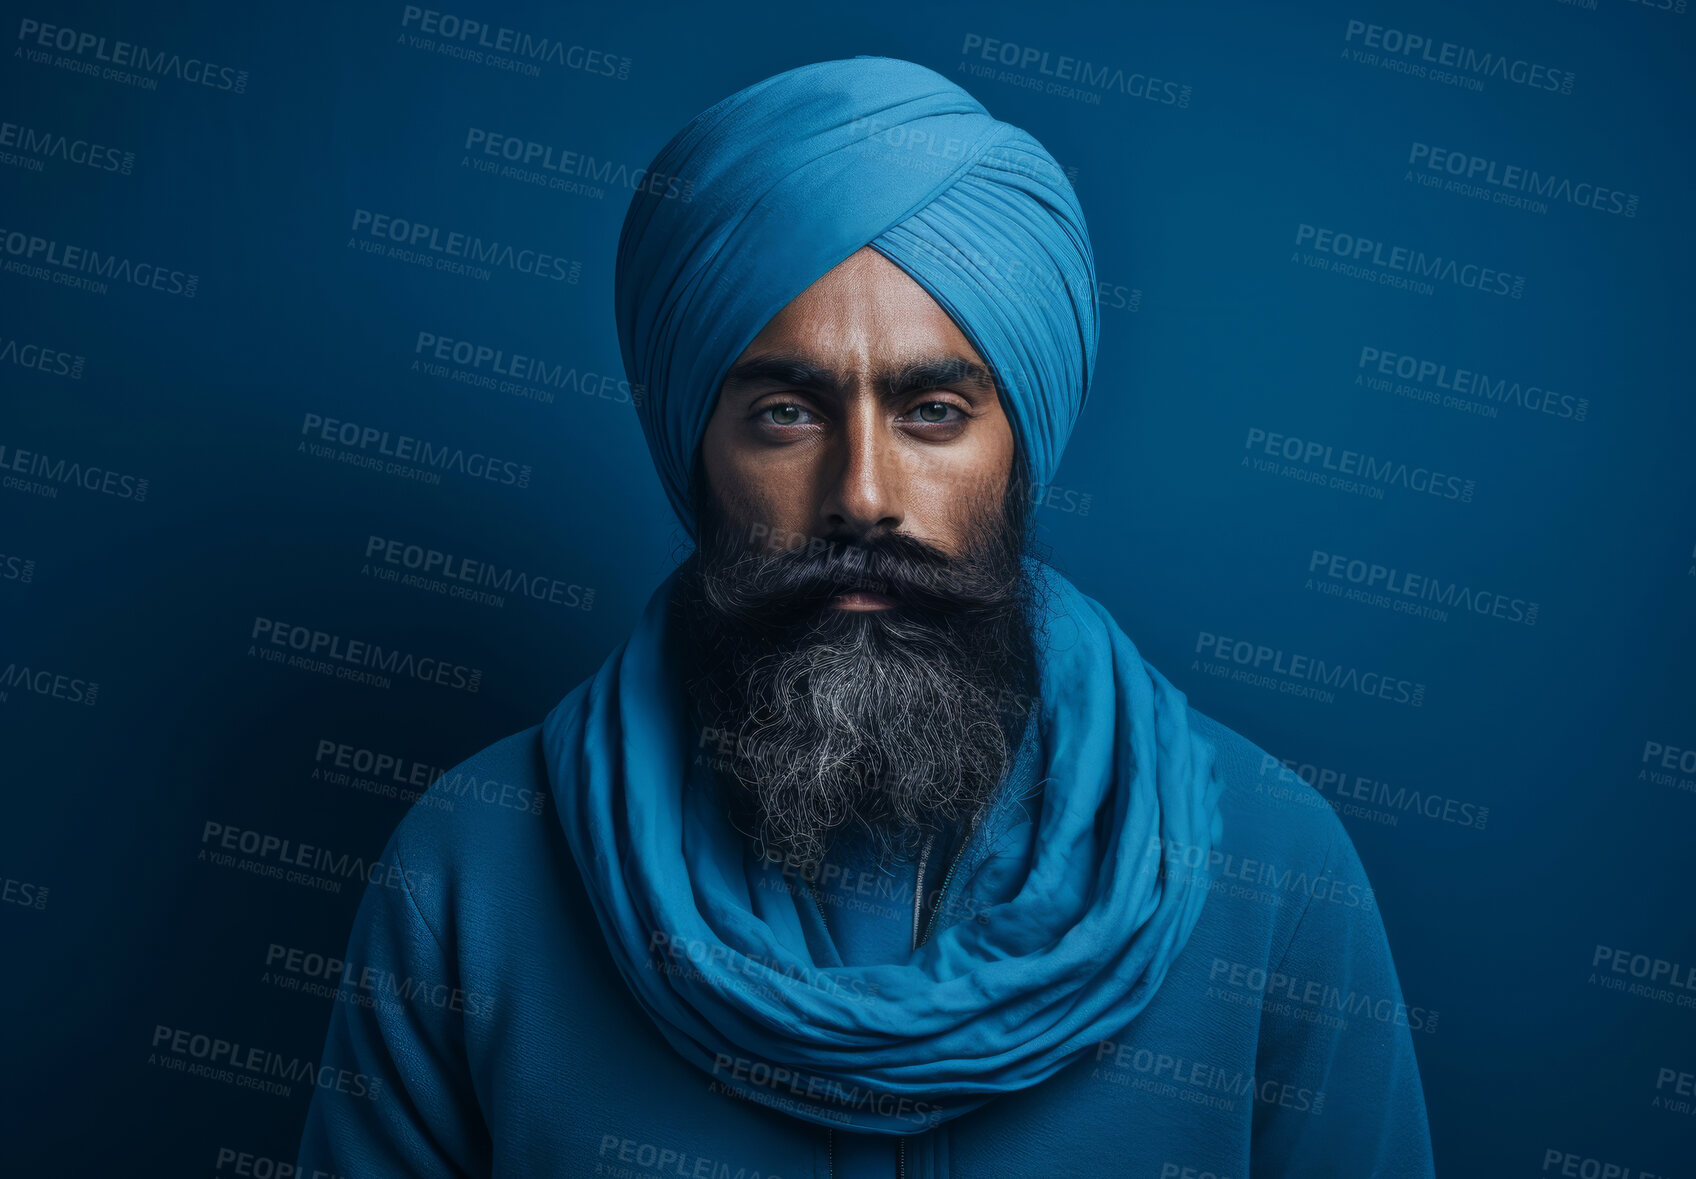 Buy stock photo Sikh Indian man wearing traditional blue turban. Studio portrait. Religion concept.